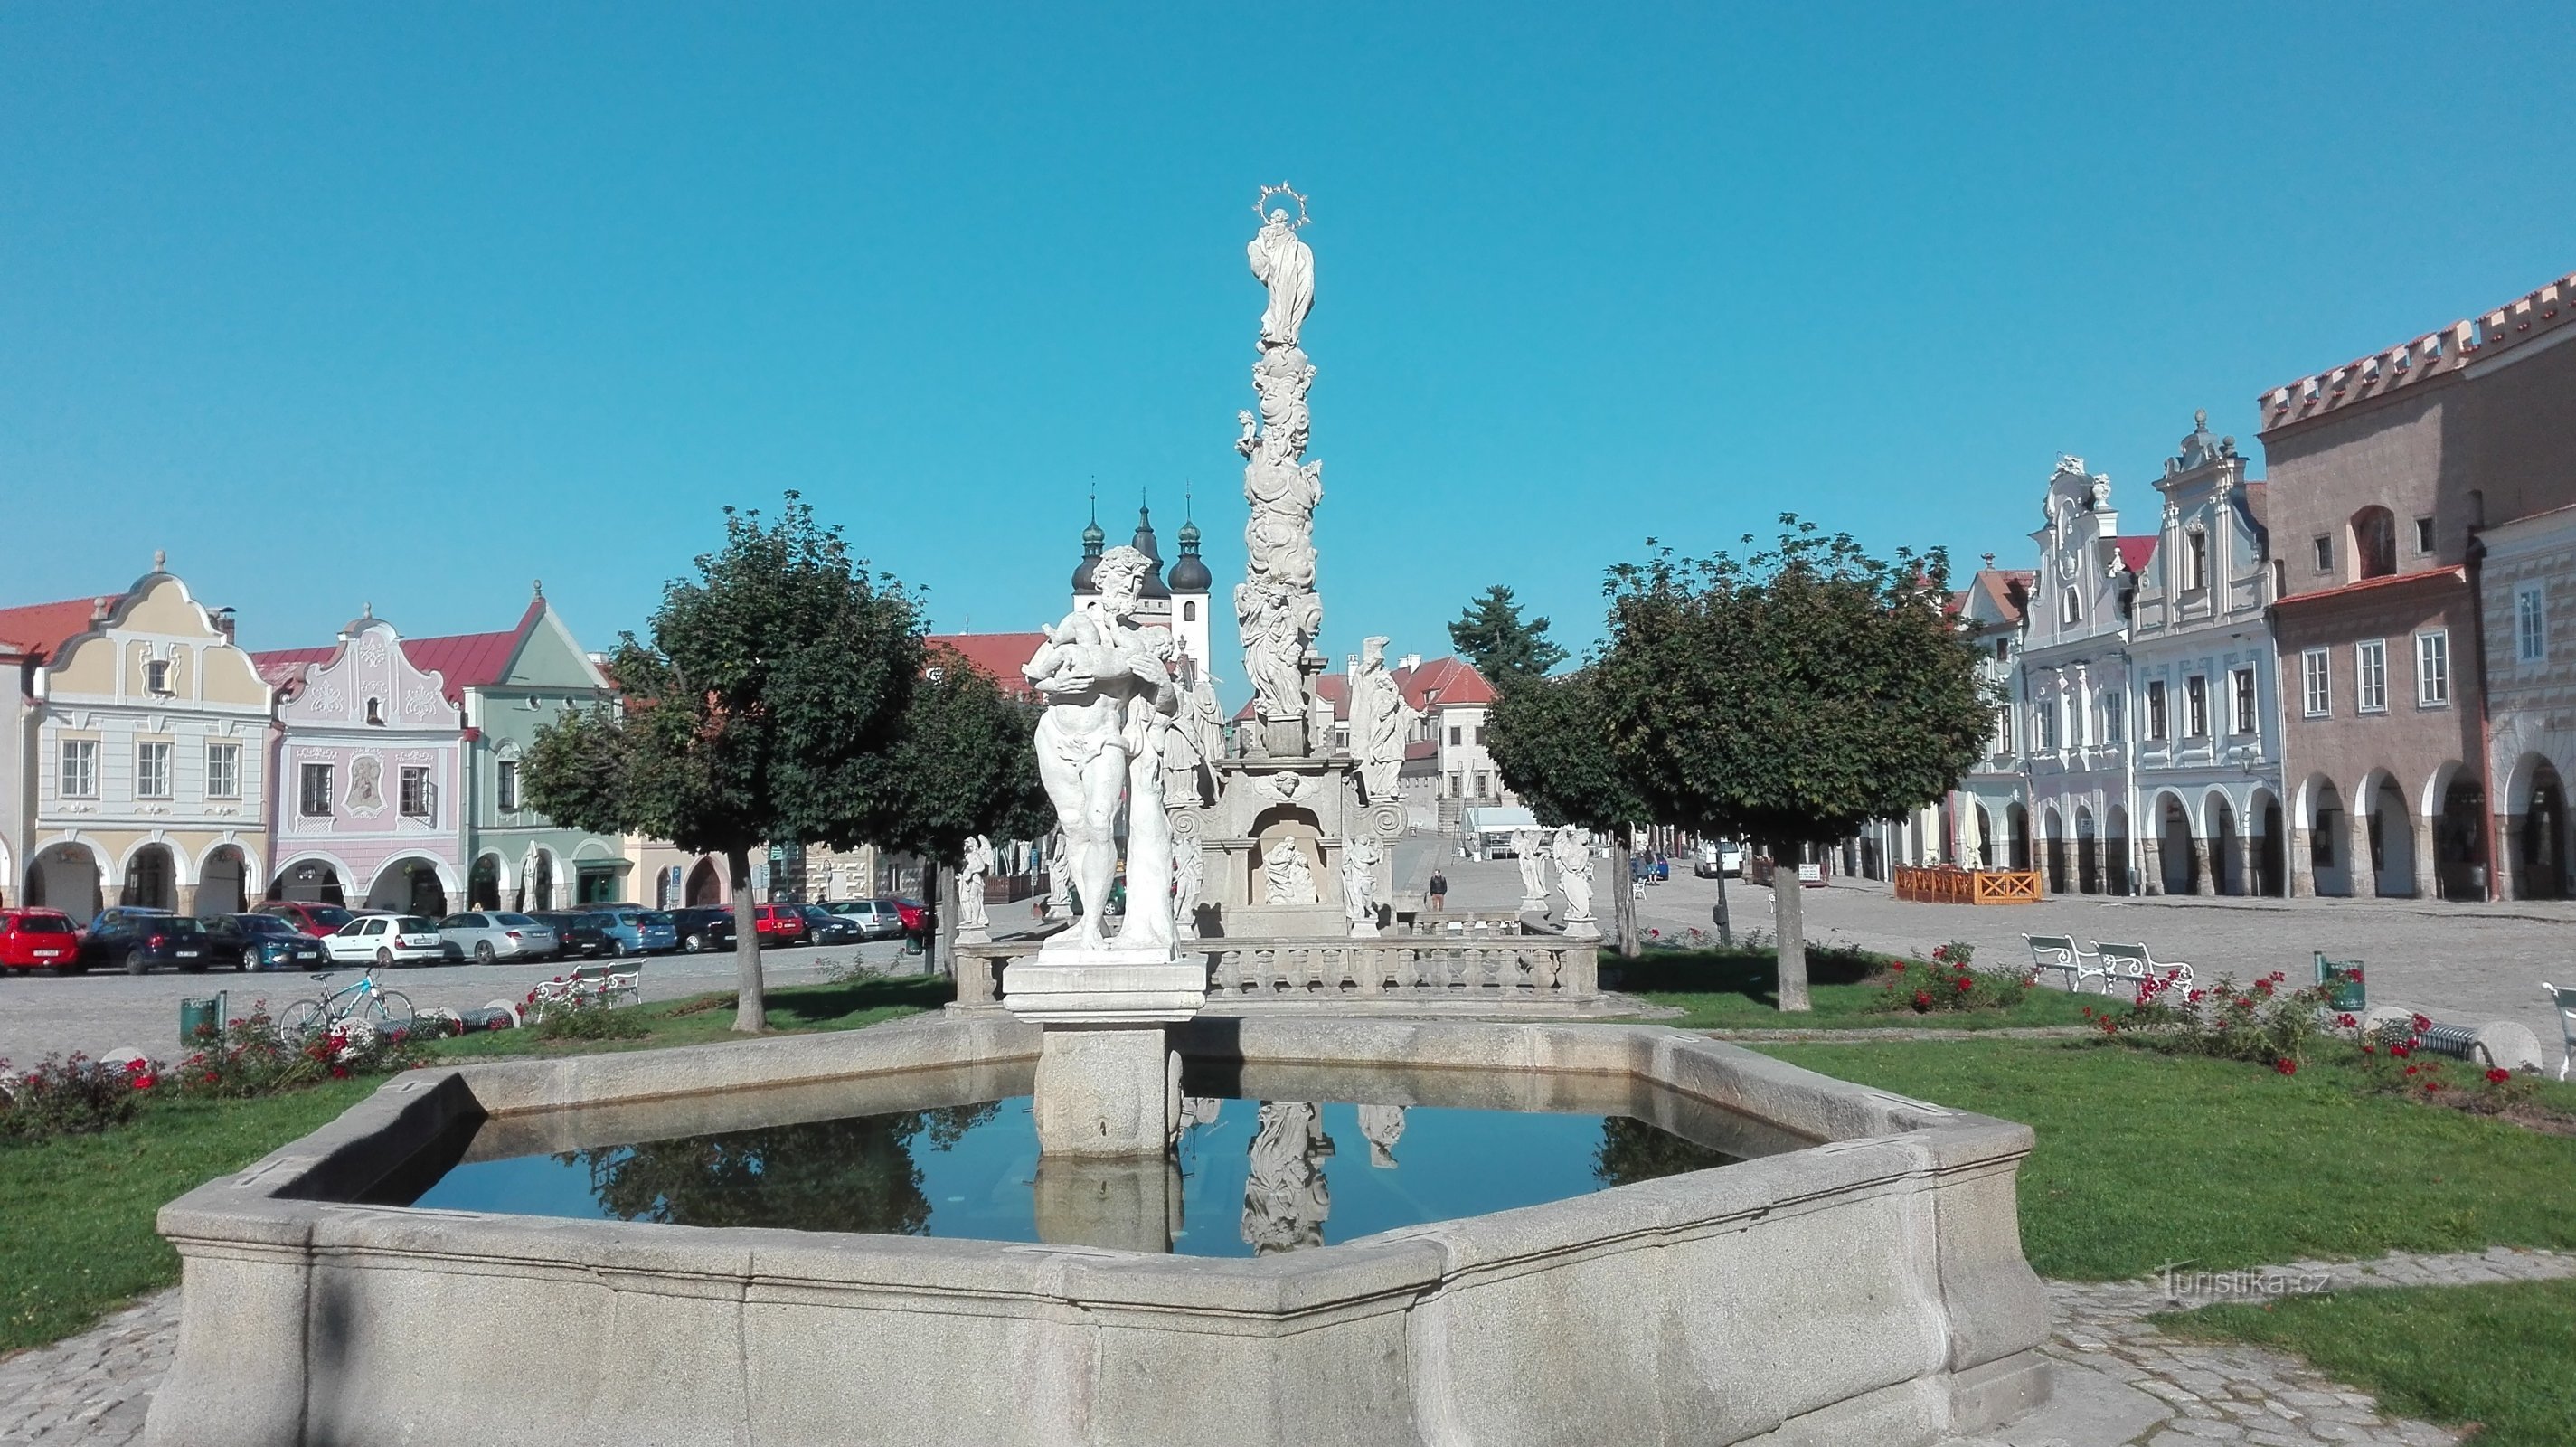 Zachariáše z Hradec広場の噴水とマリアン柱。